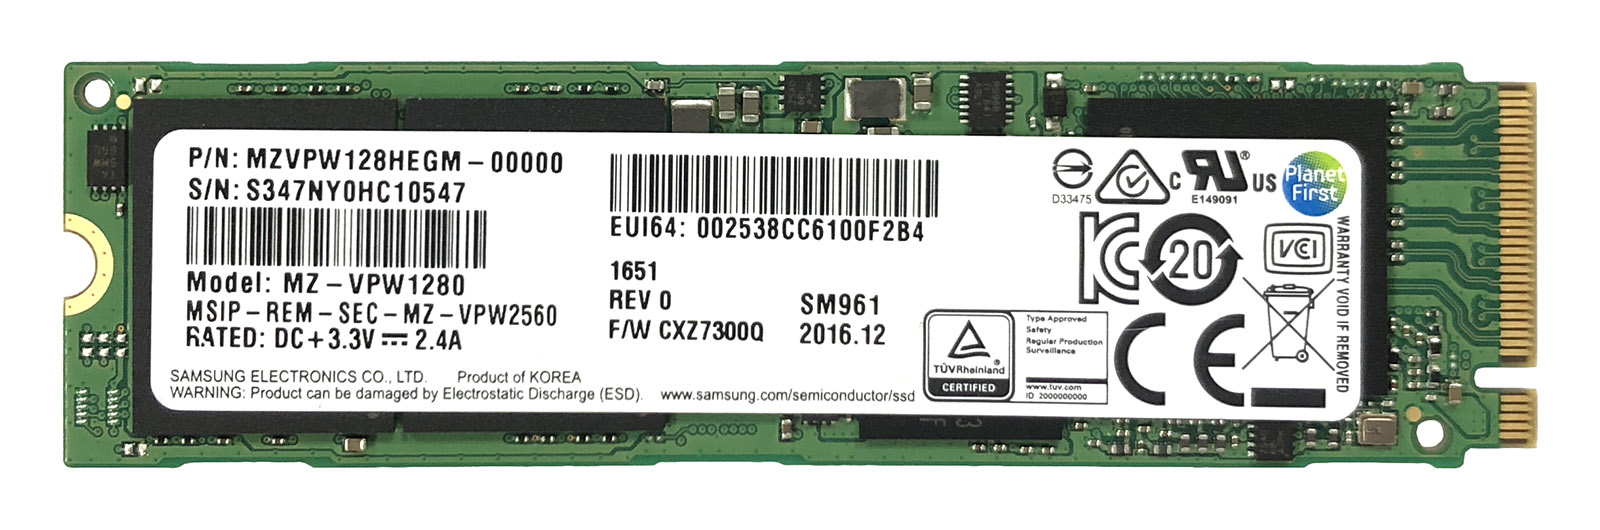 SM961 NVMe SAMSUNG 512G SSD